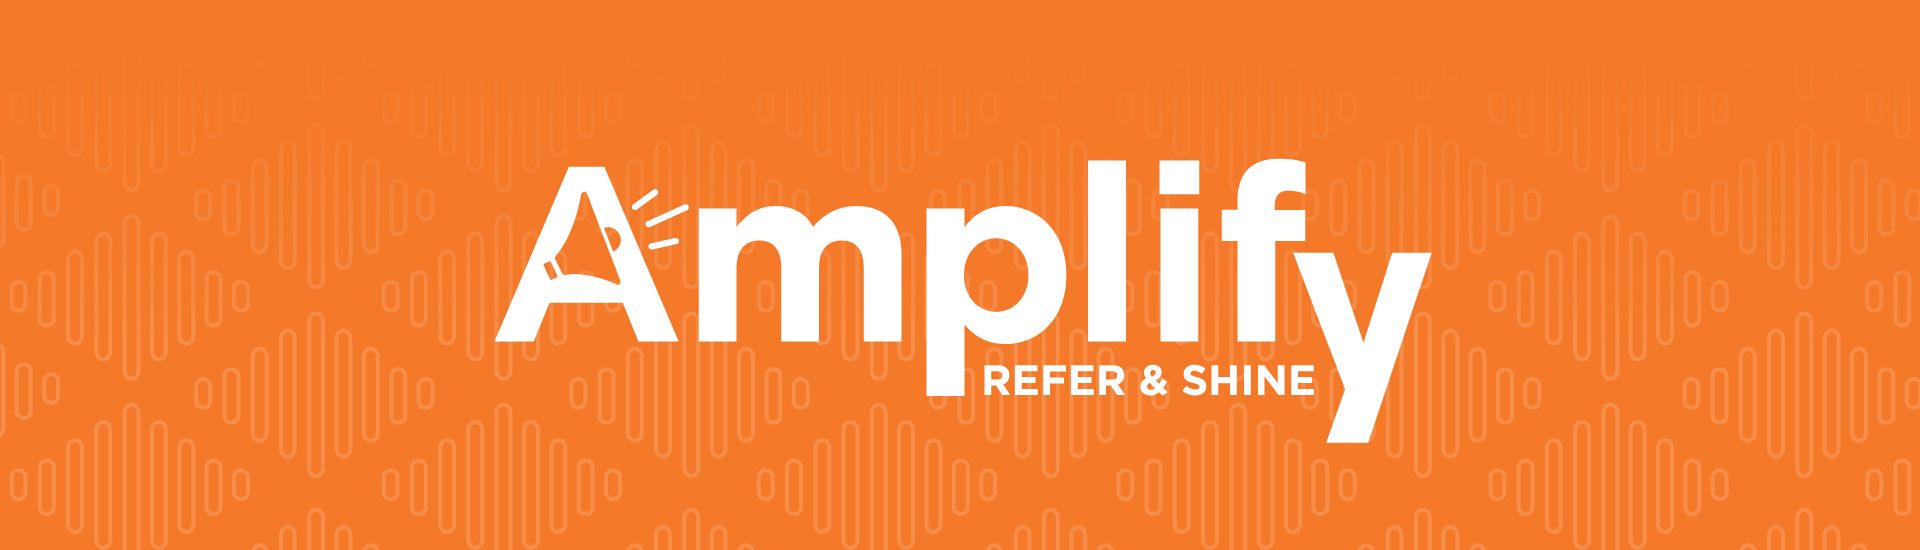 Amplify banner image